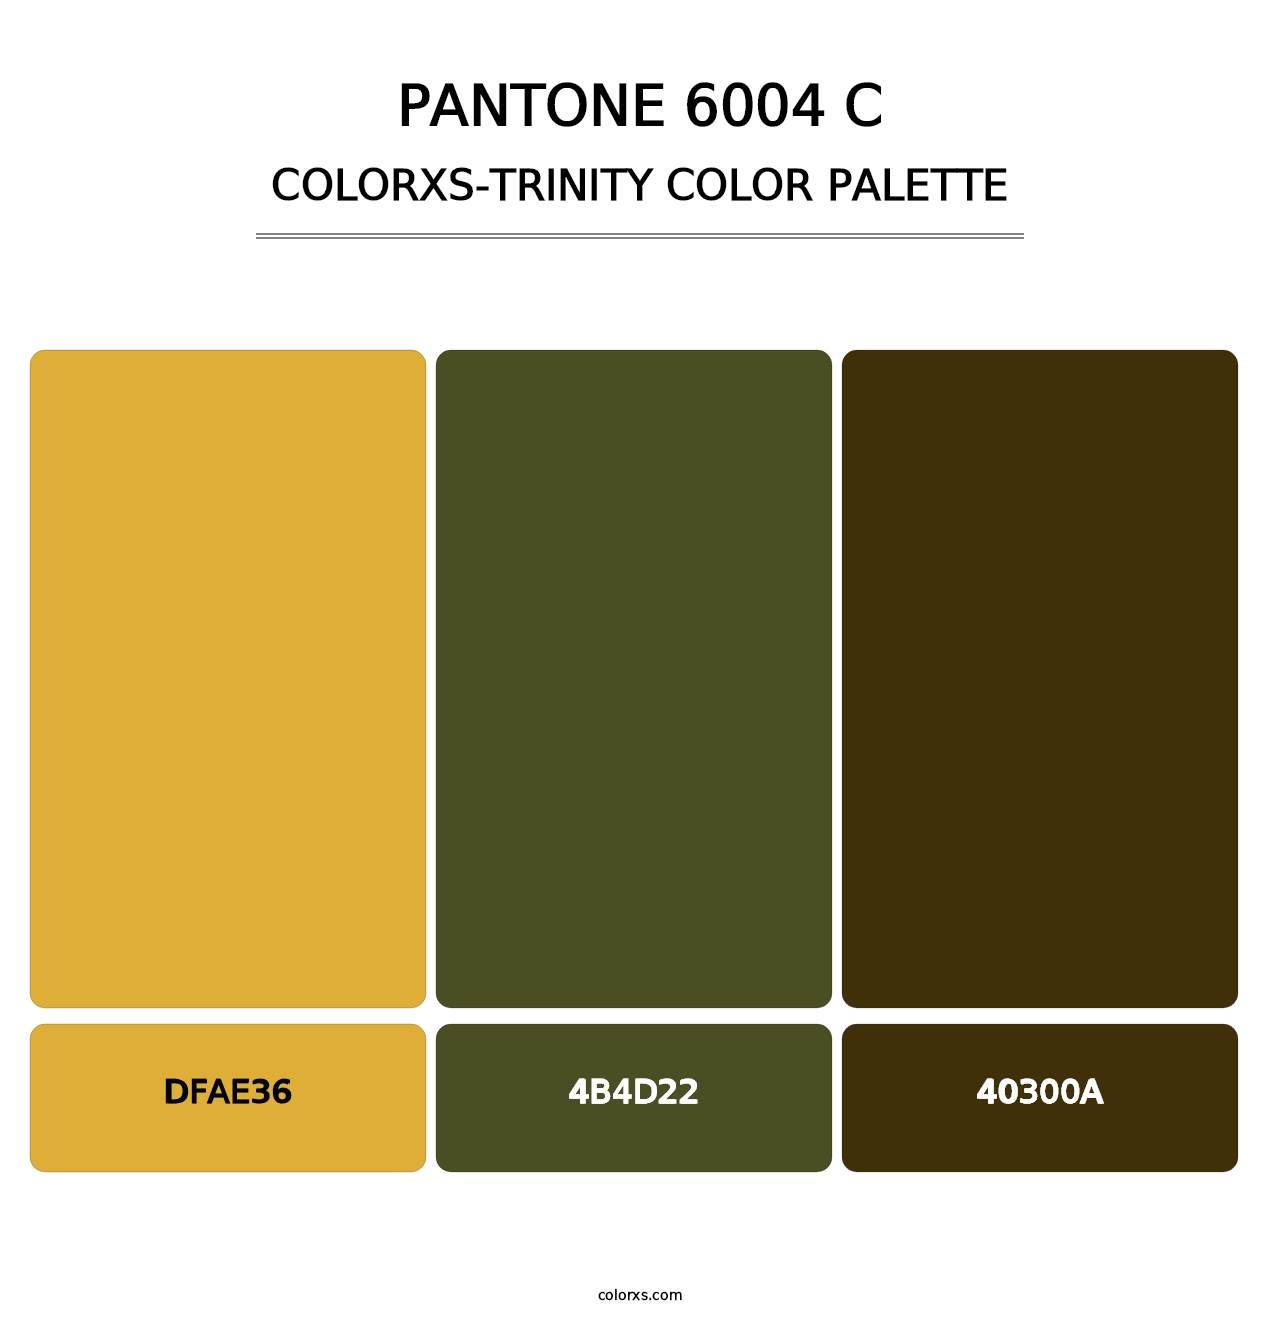 PANTONE 6004 C - Colorxs Trinity Palette